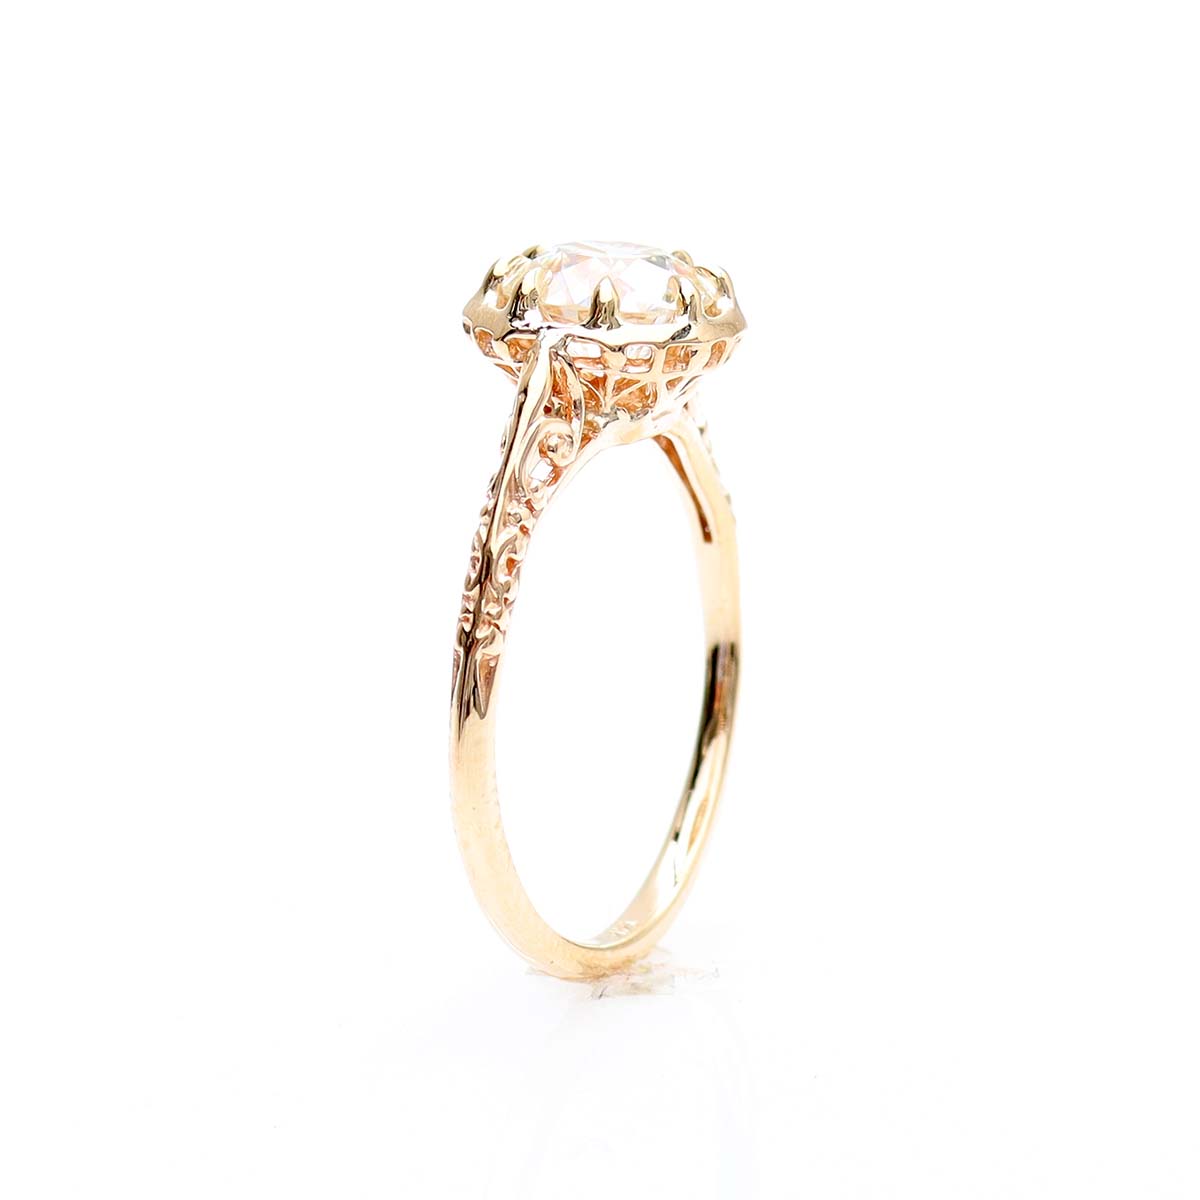 The Violet Edwardian Inspired Engagement Ring #3362-2